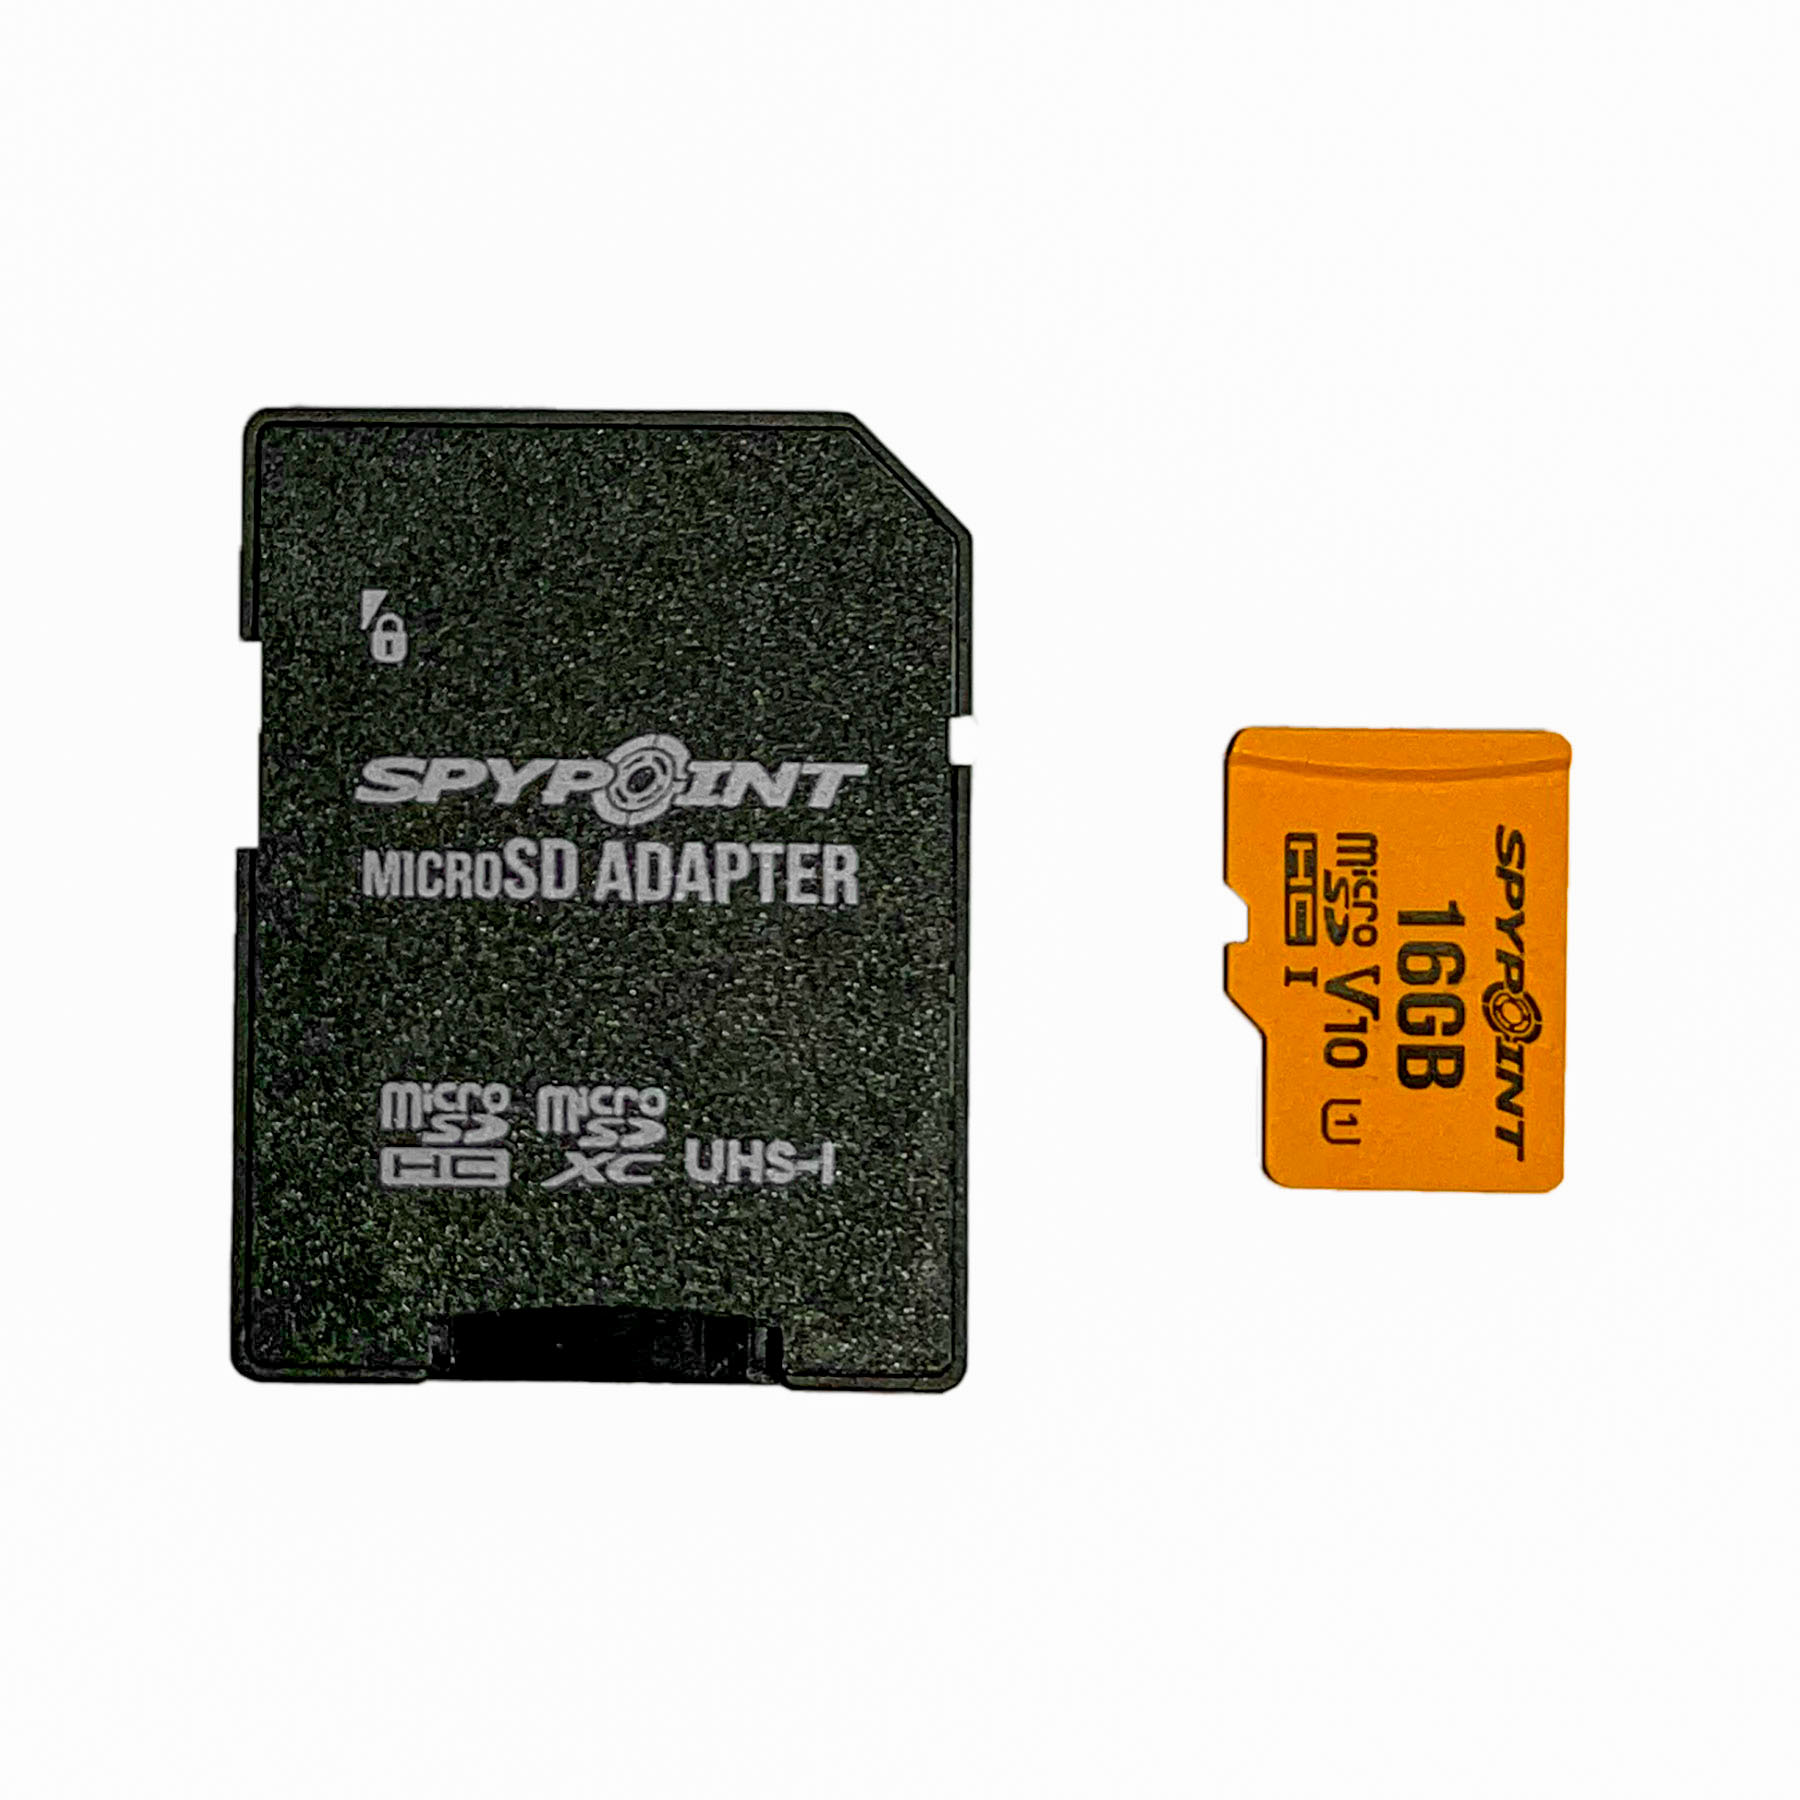 SPYPOINT Micro SDHC 16GB